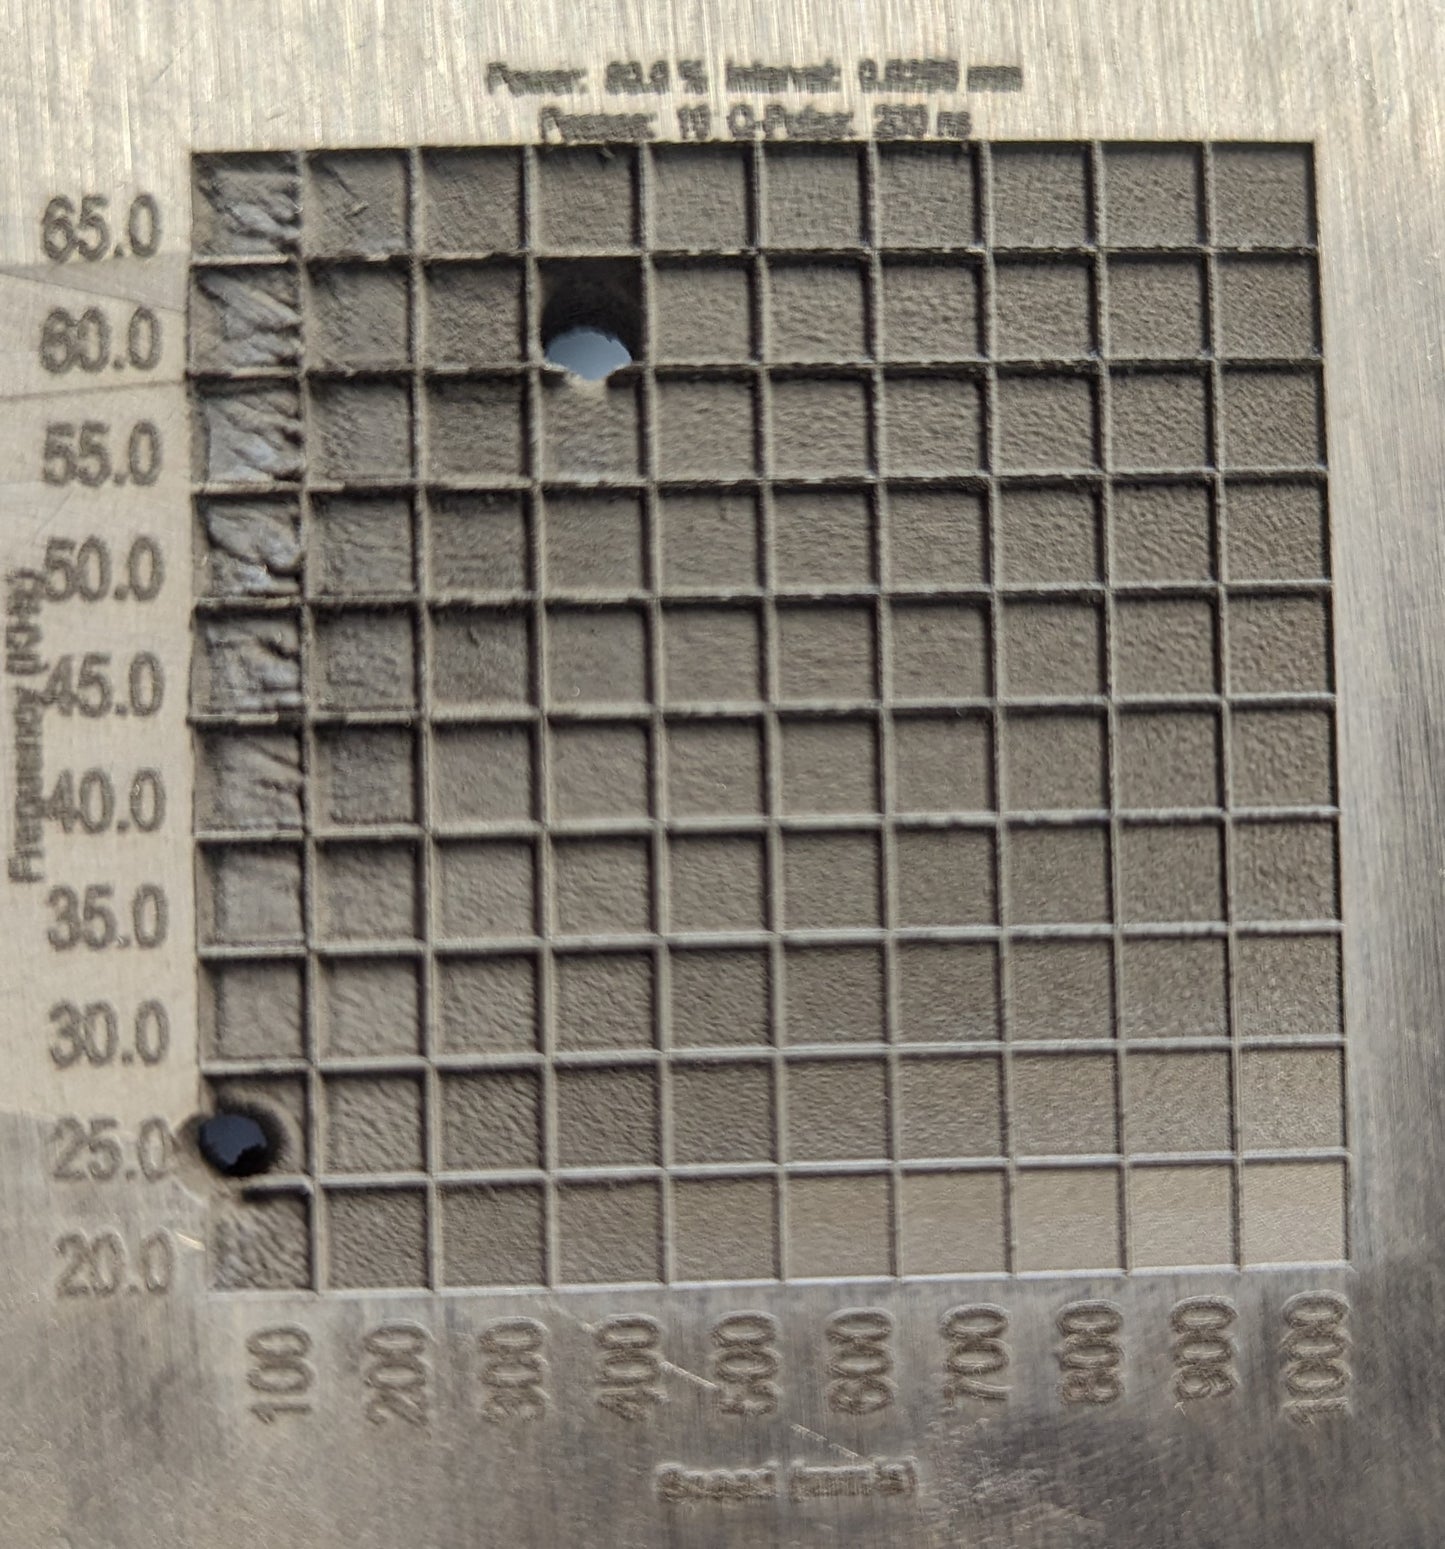 LightBurn - 9 Sqaure Frequency Test for Finding Optimum Engraving Depth